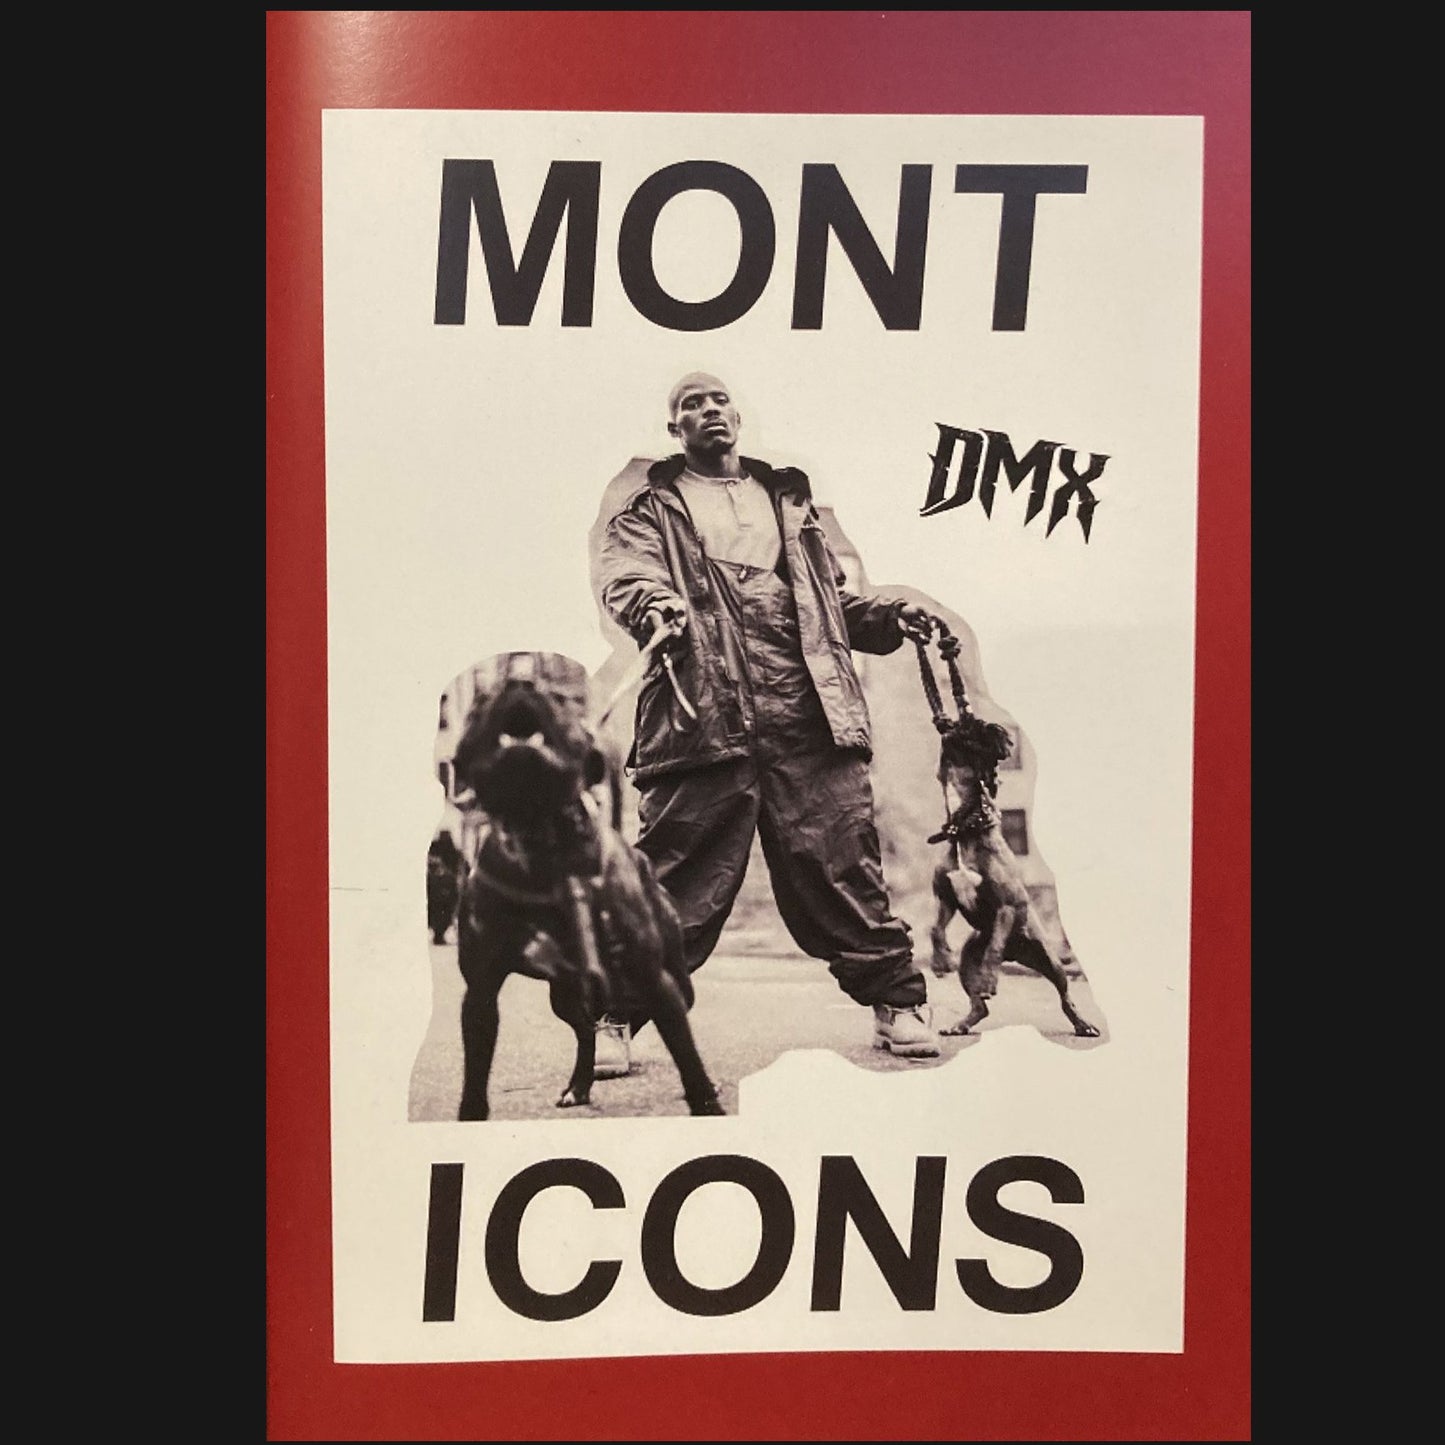 MONT ICONS - "DMX" BOOK